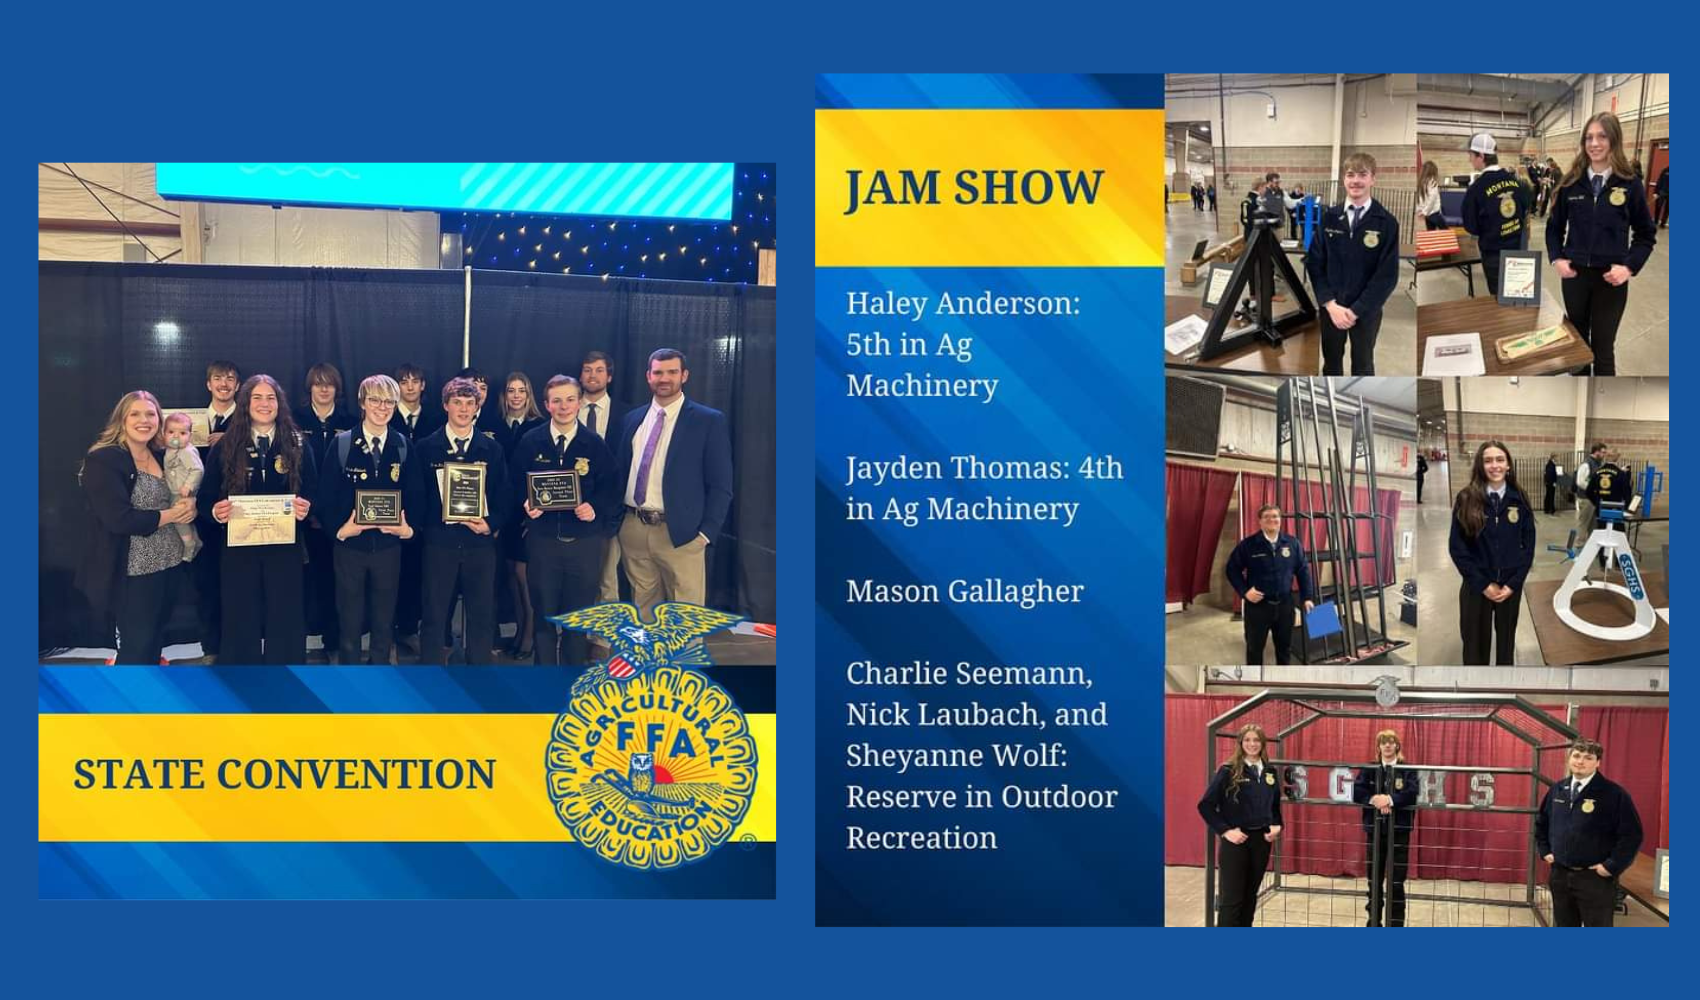 FFA state Convention & JAM Show